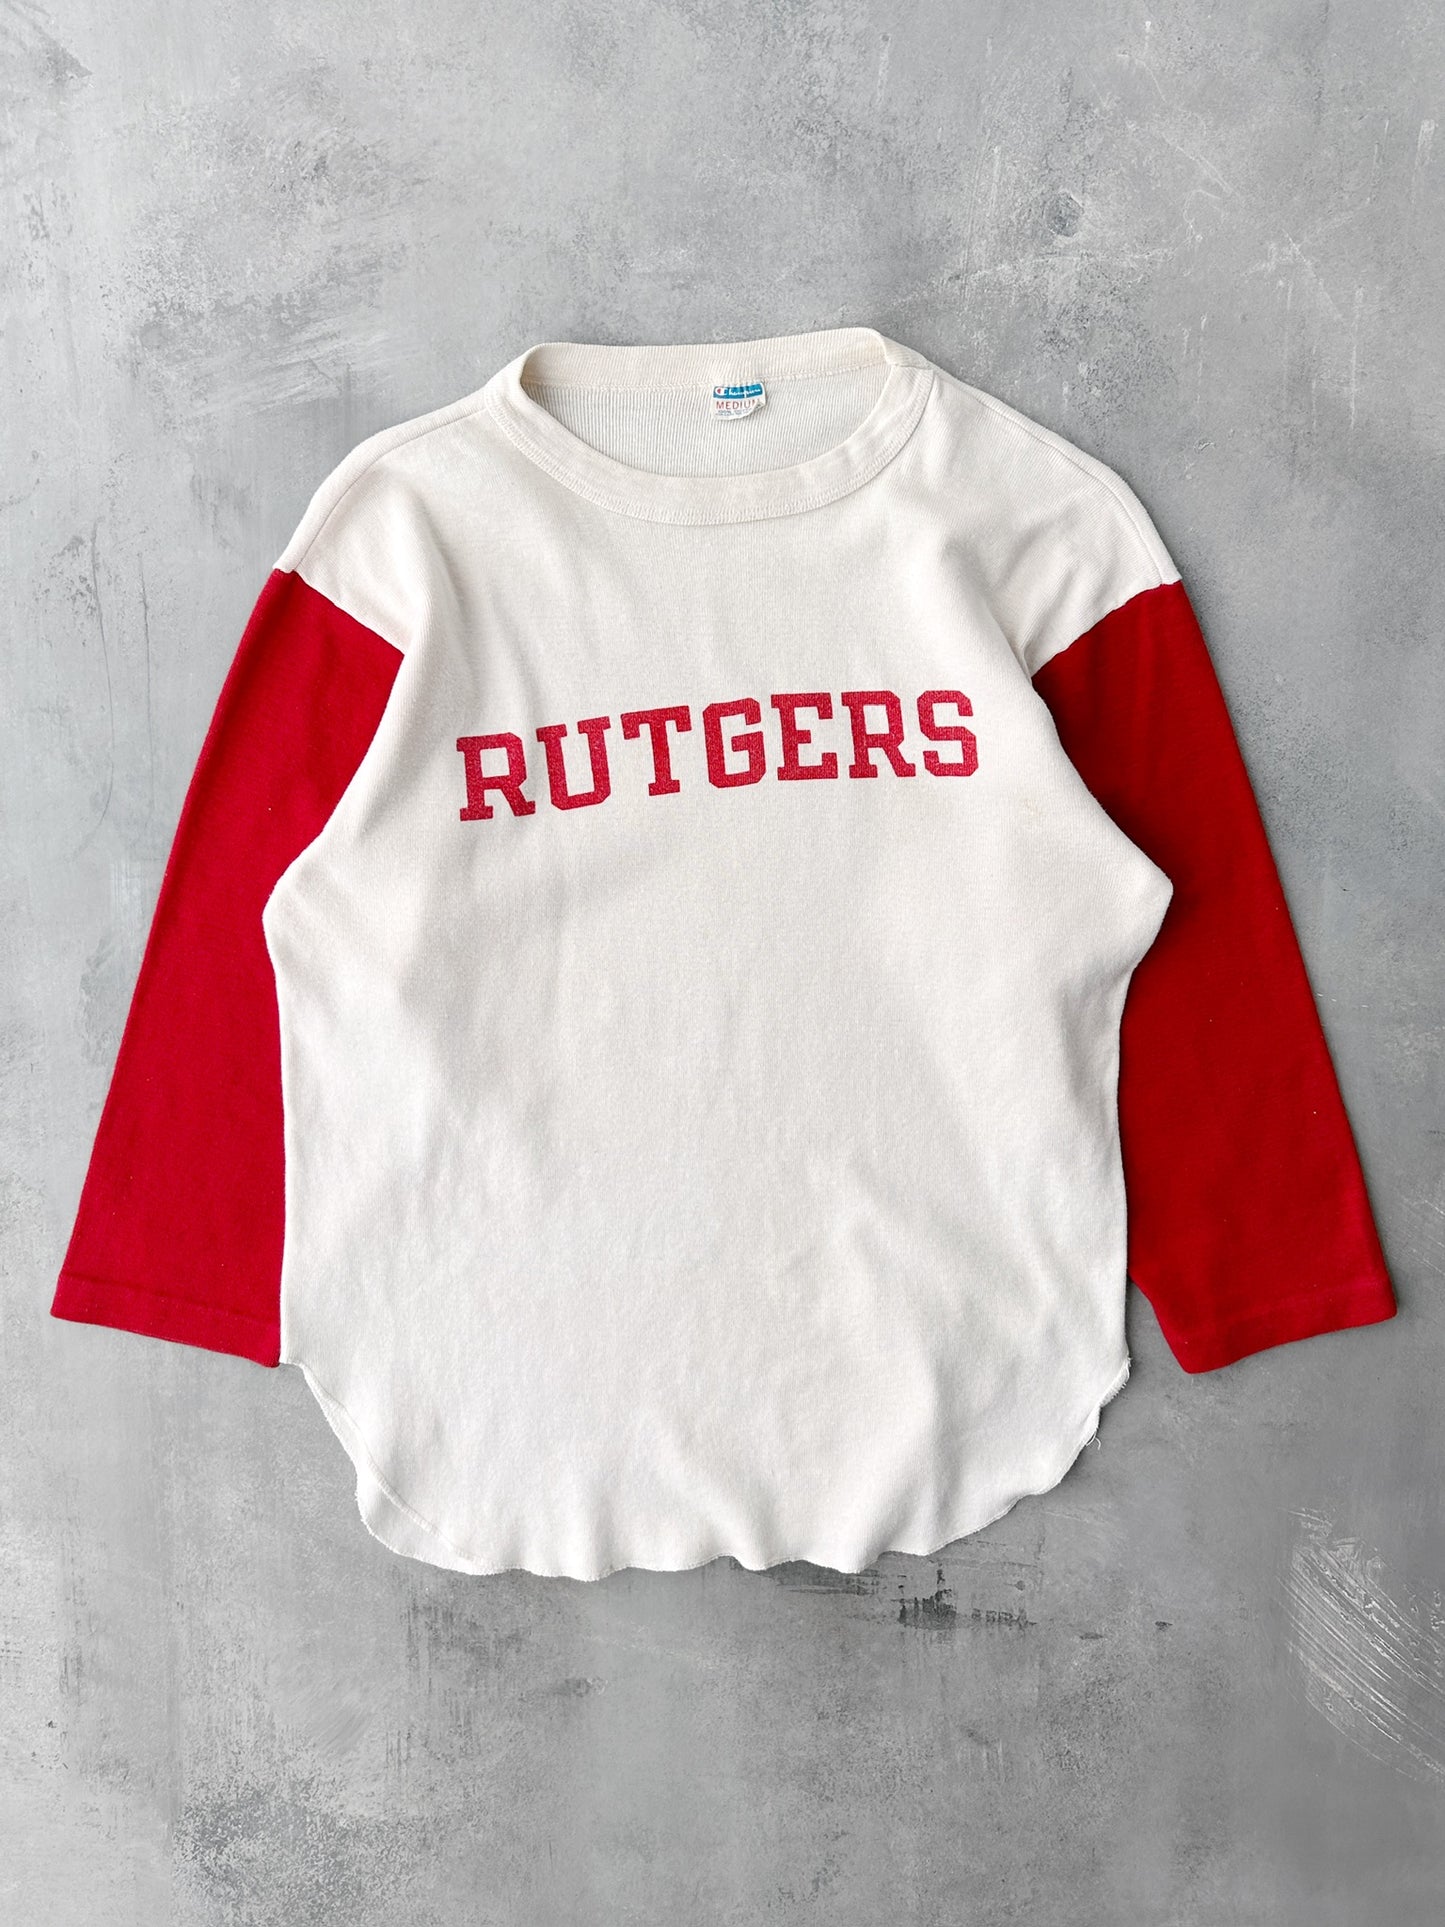 Rutgers Baseball T-Shirt 70's - Small